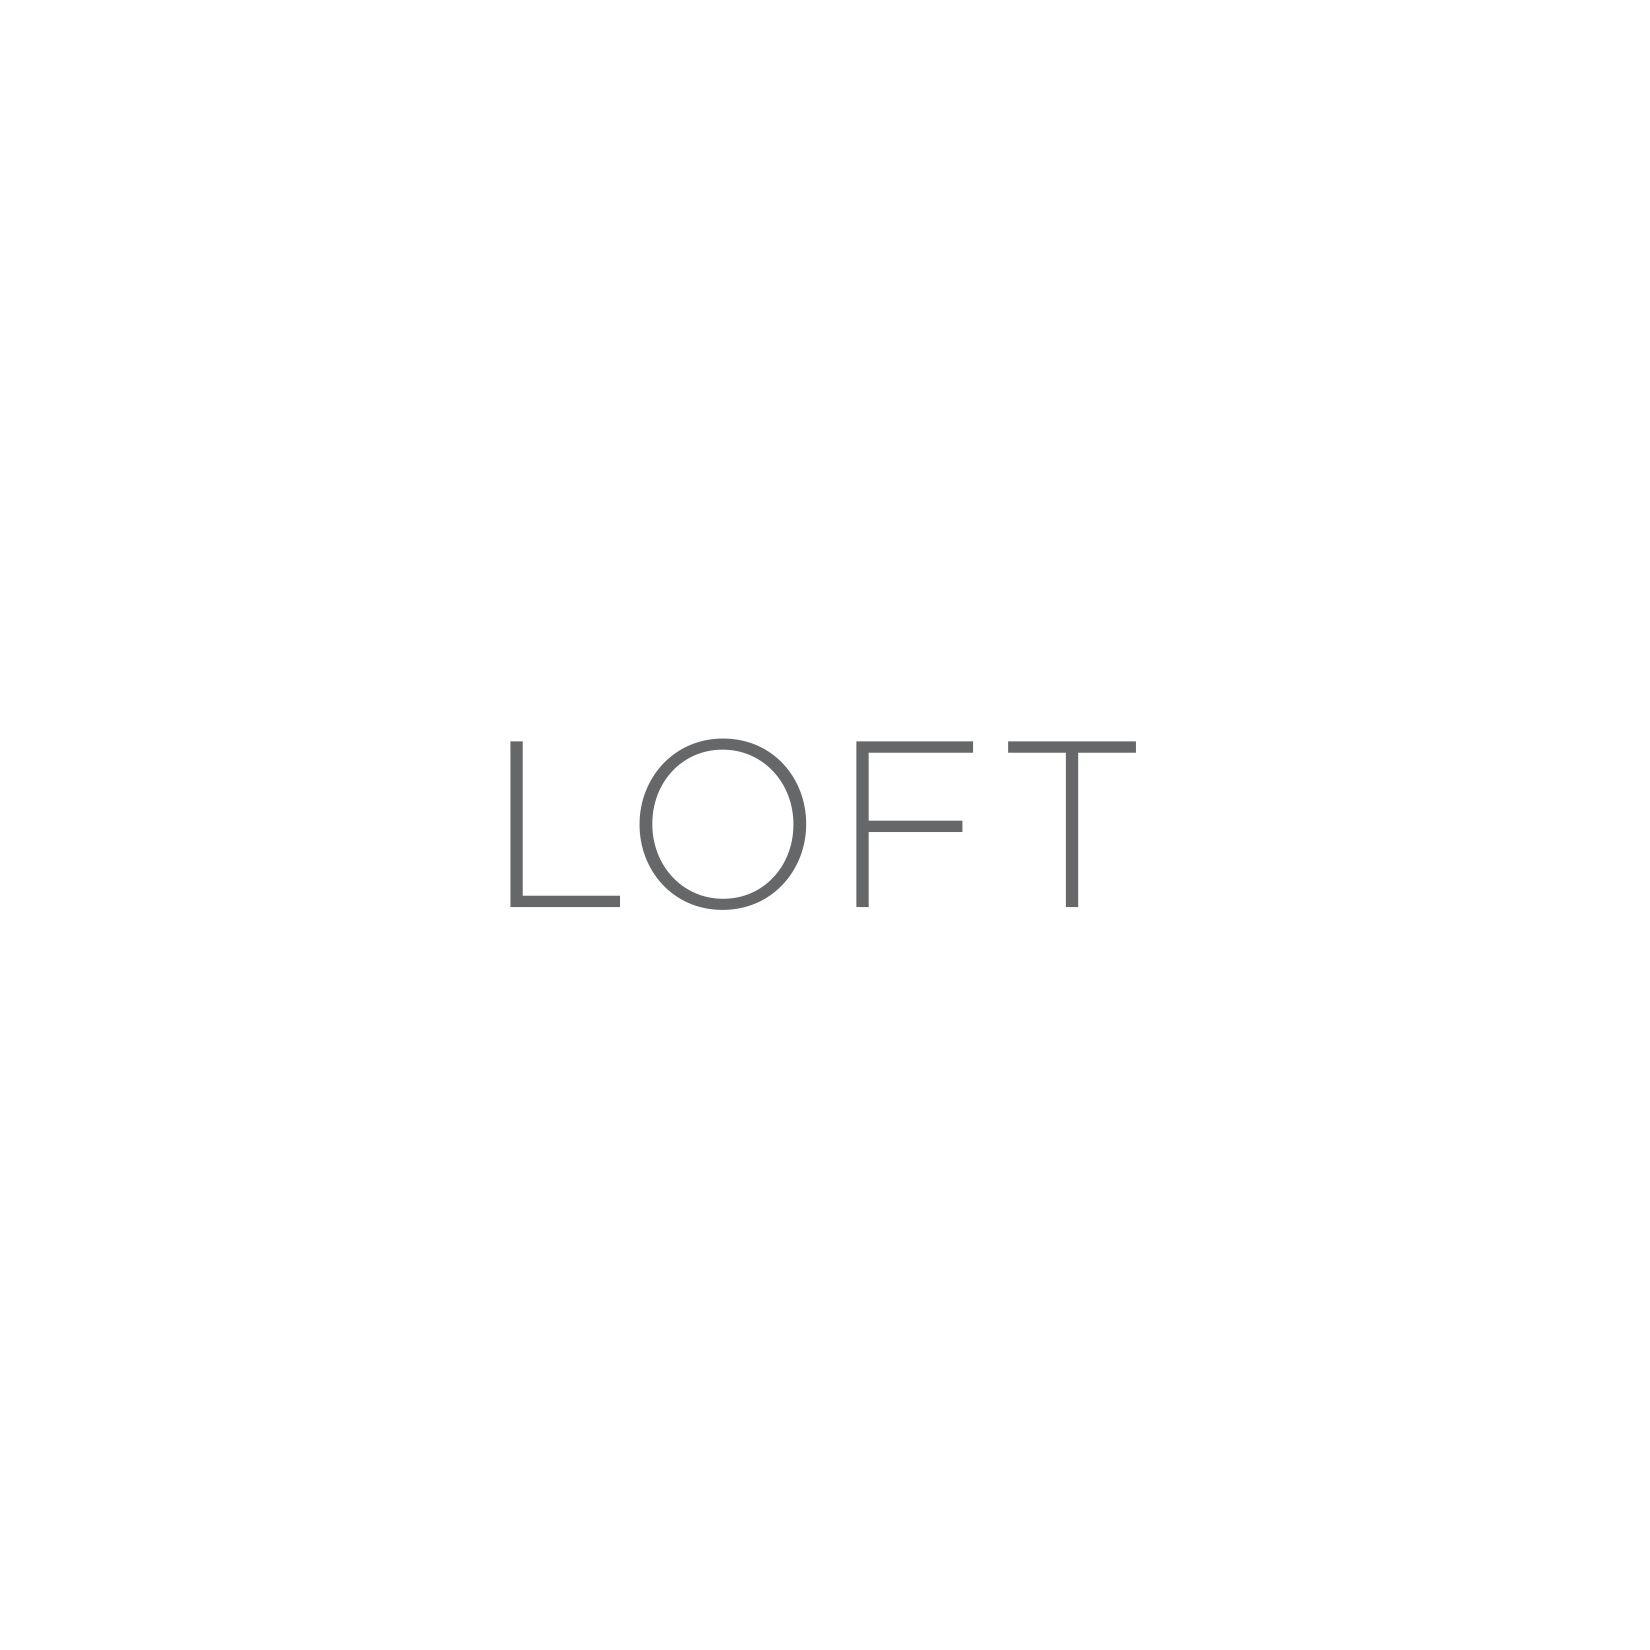 Loft Logo - LOFT - Palm Desert, CA | stores.loft.com/us/ca/palm-desert/73525-el ...